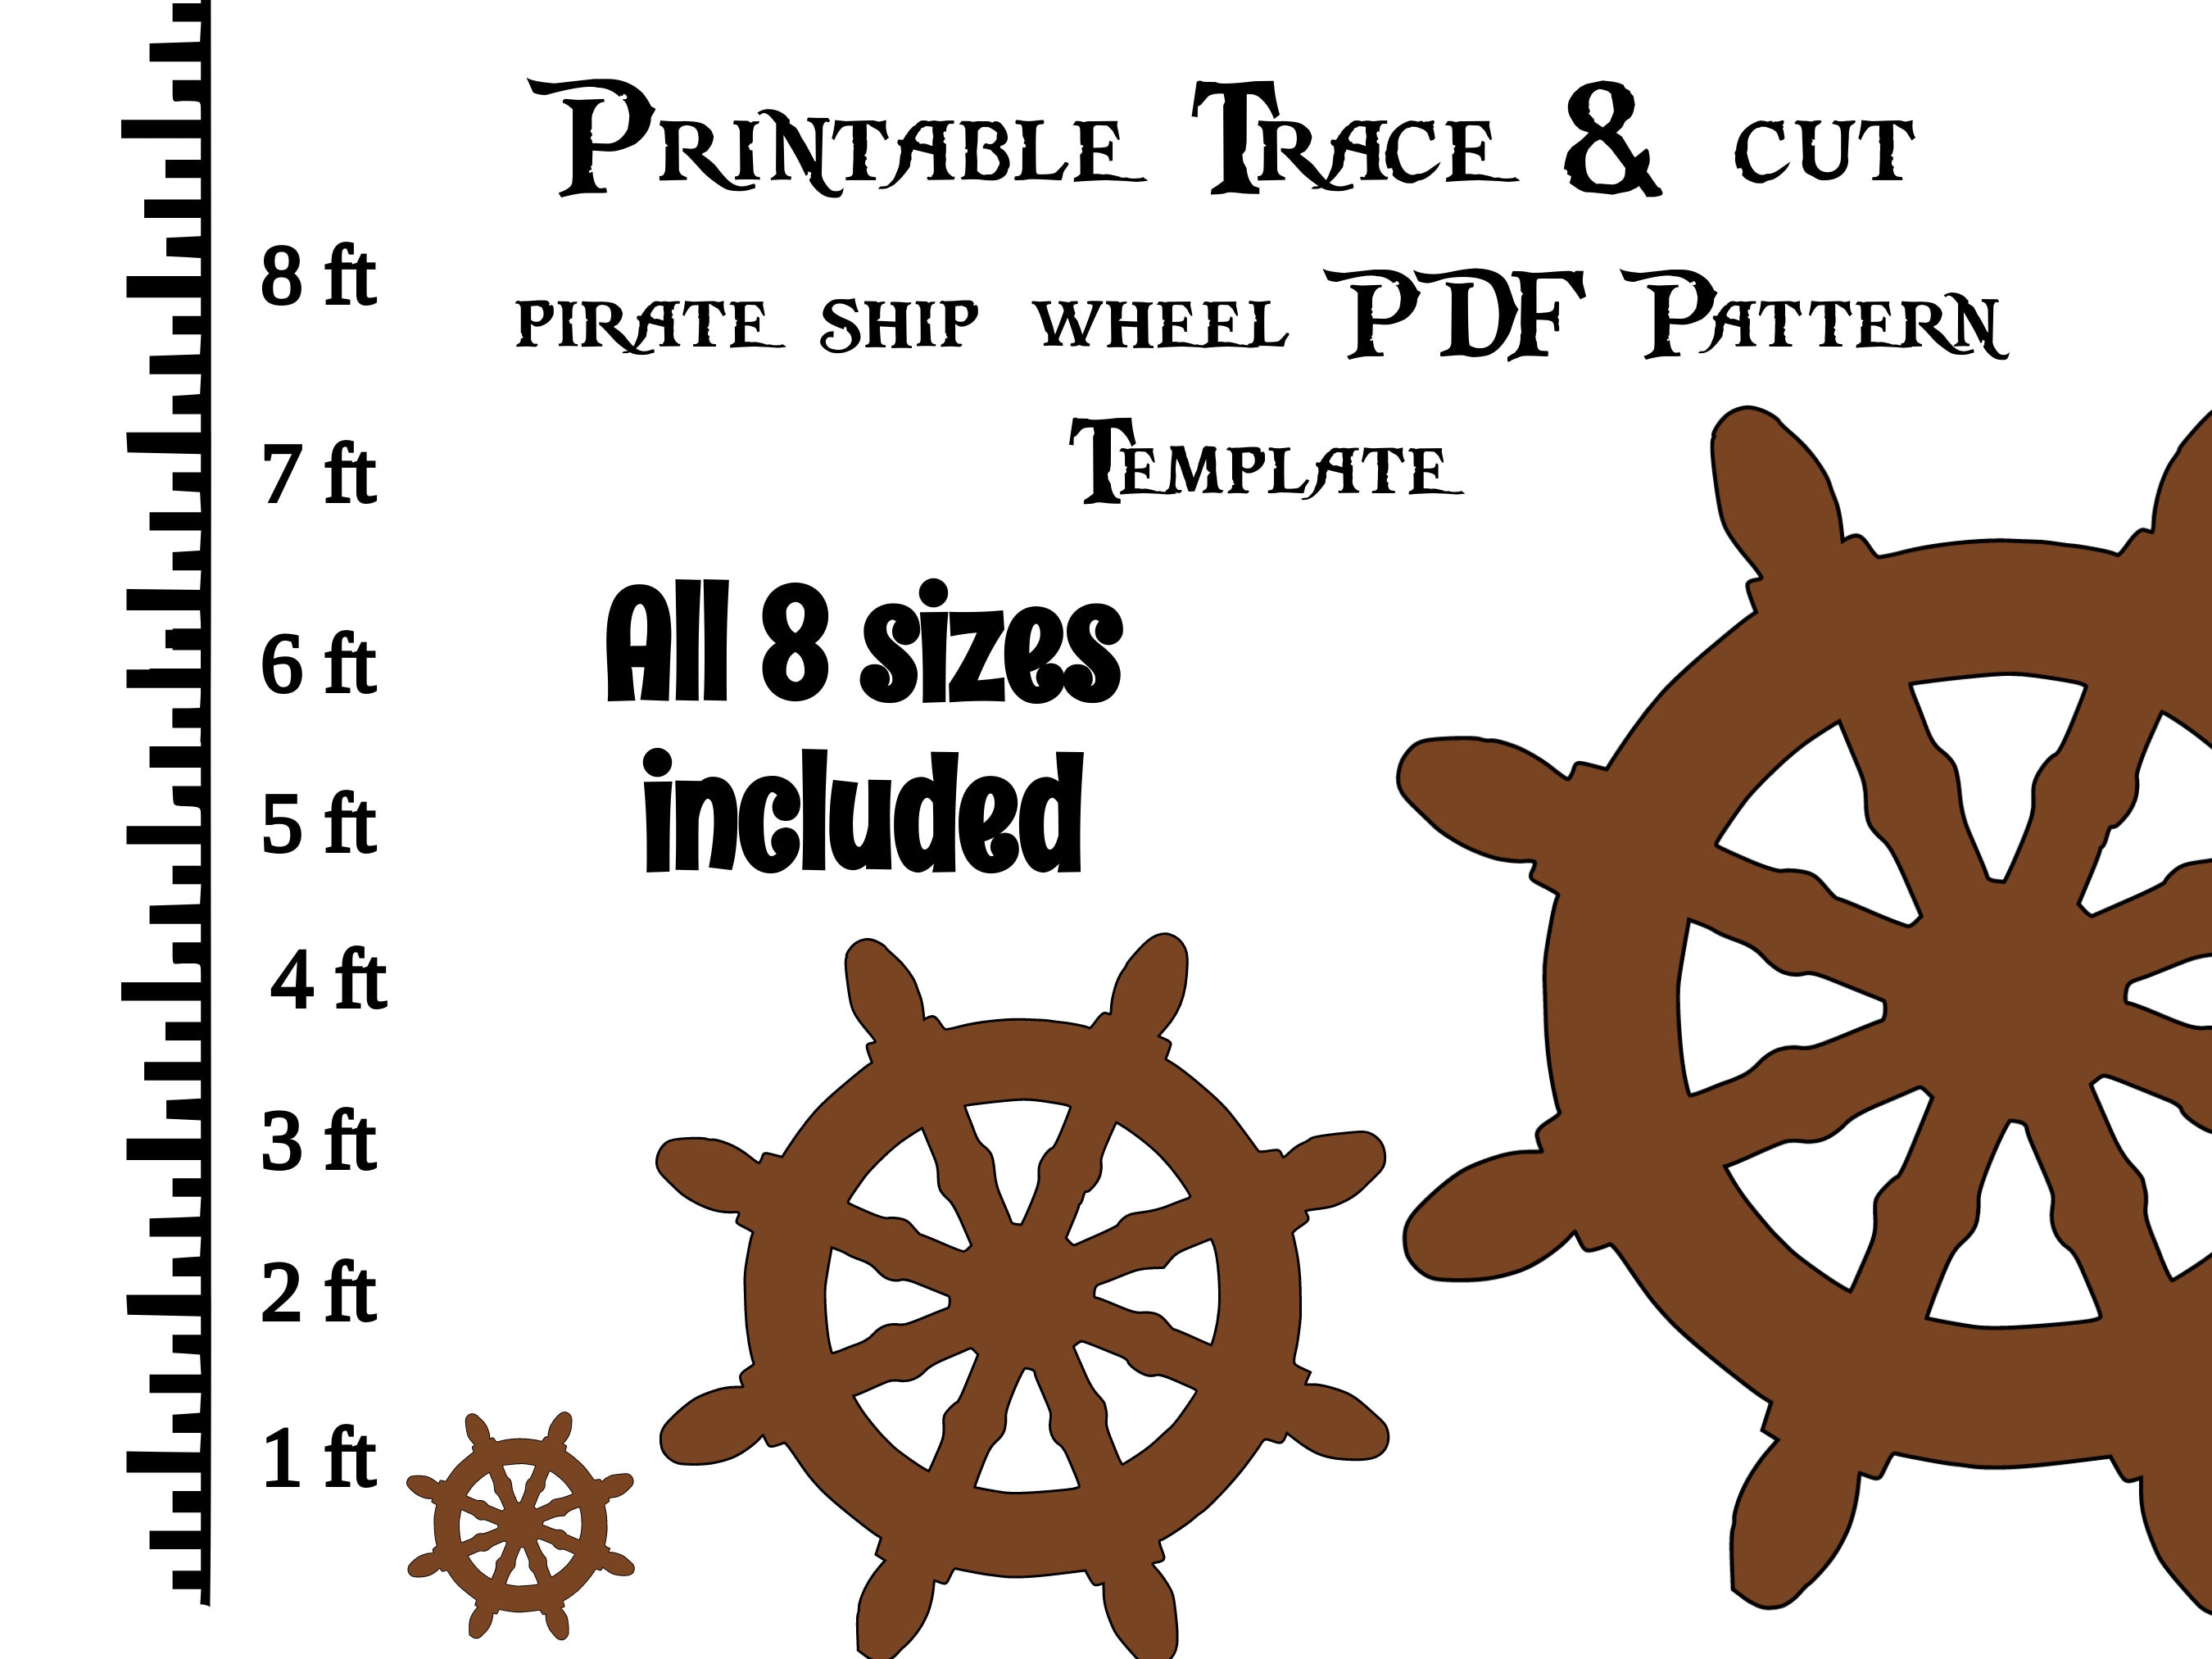 Pirate Ship Wheel Large Display Poster (teacher made)